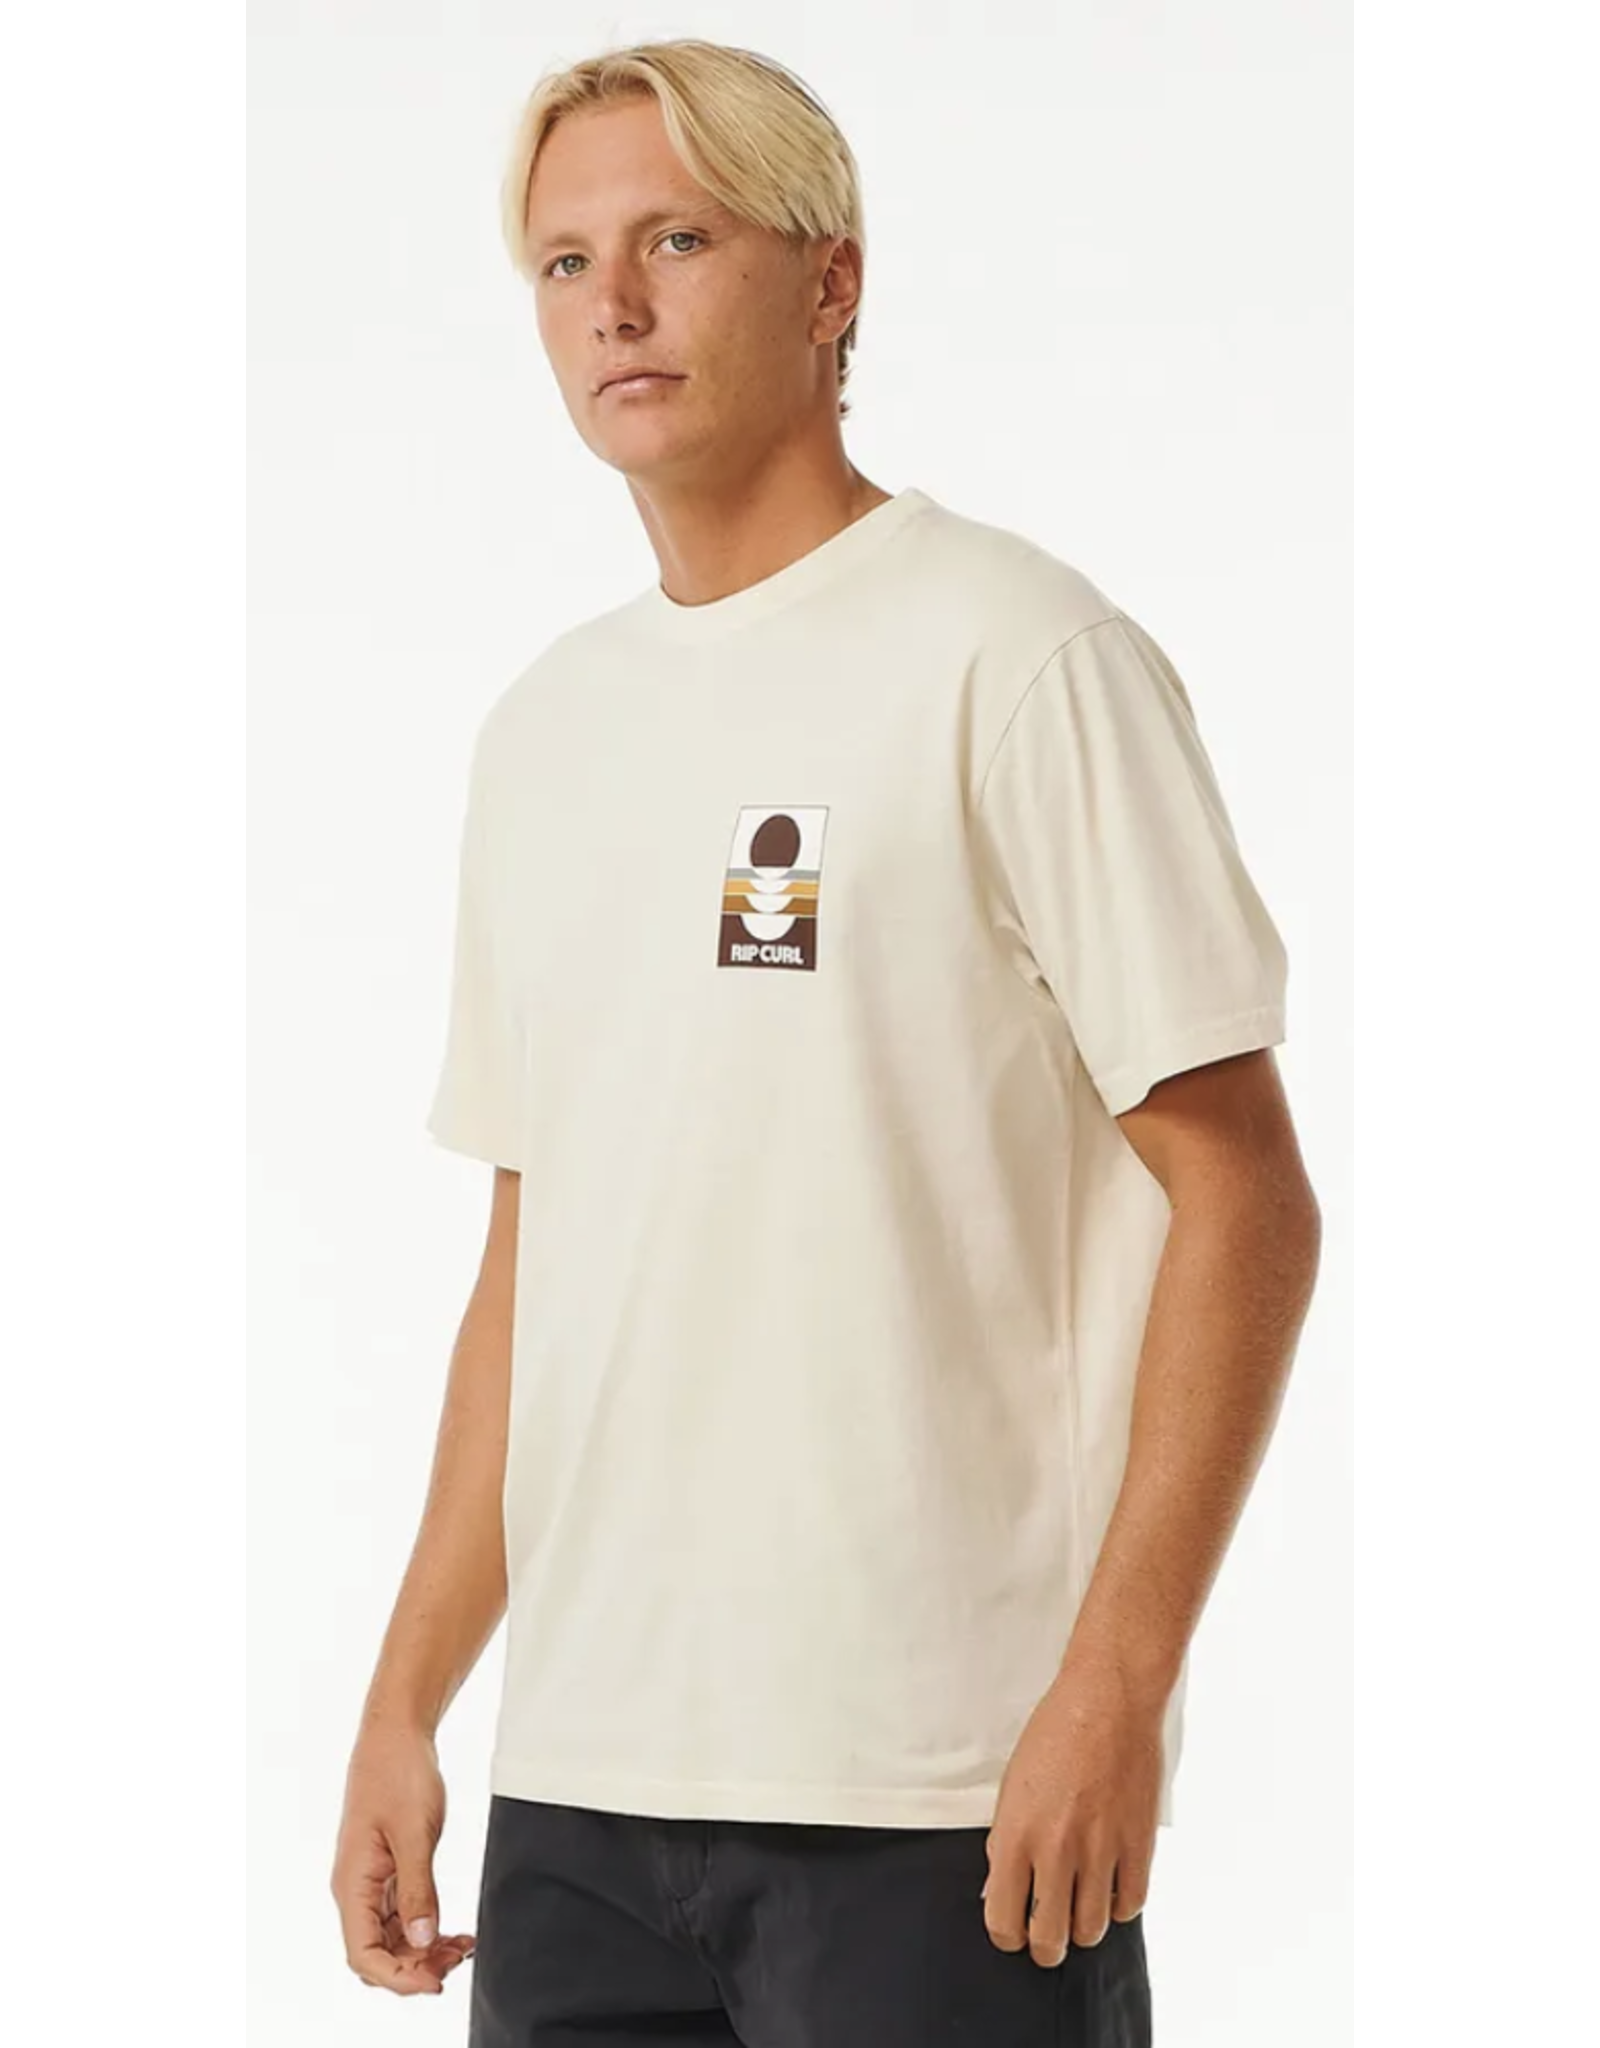 Rip Curl Rip Curl Surf Revivial Peaking T-shirt Vintage White